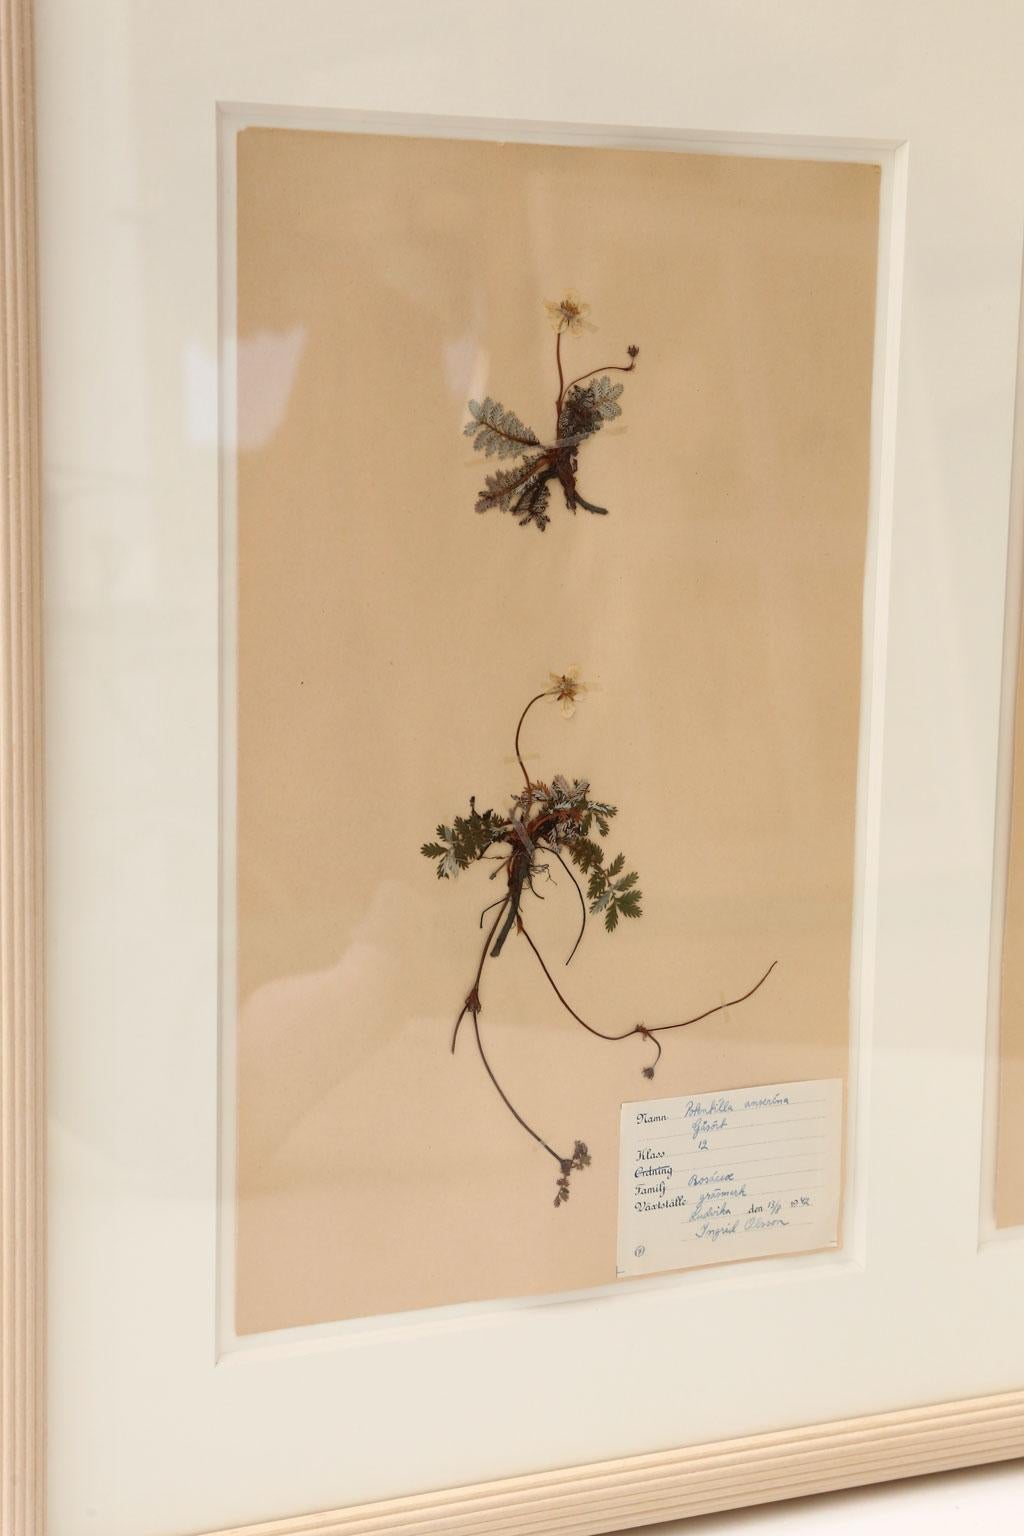 Folk Art Framed Set of Four Herbaria